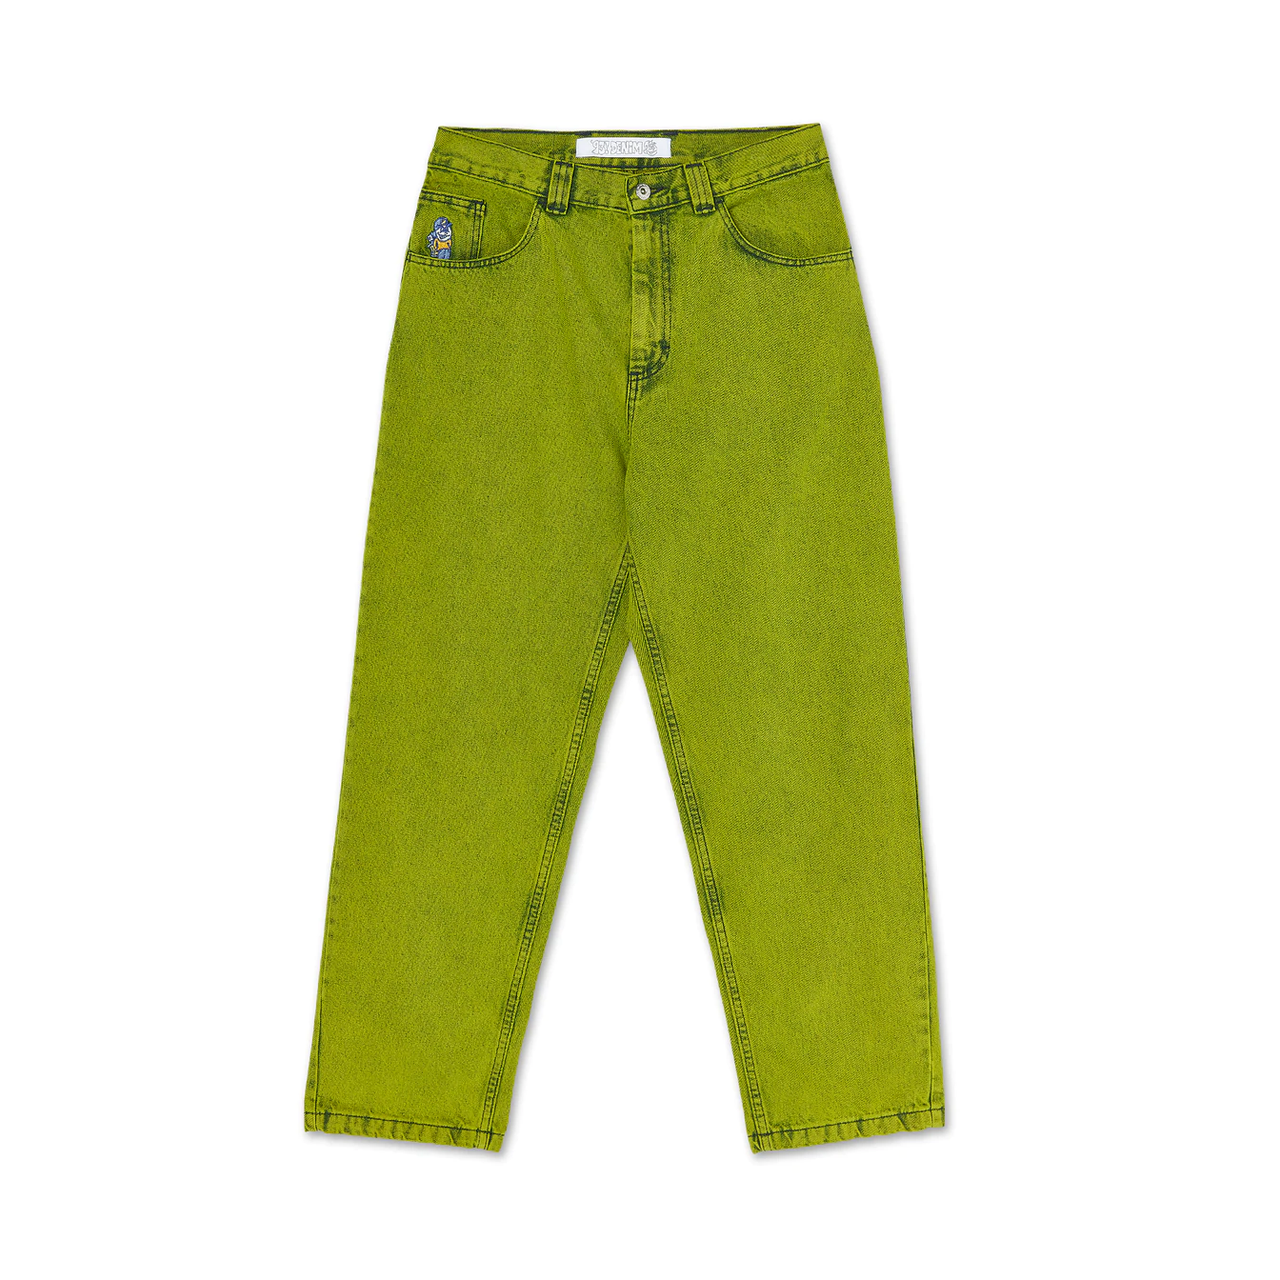 '93! Pants - Chartreuse